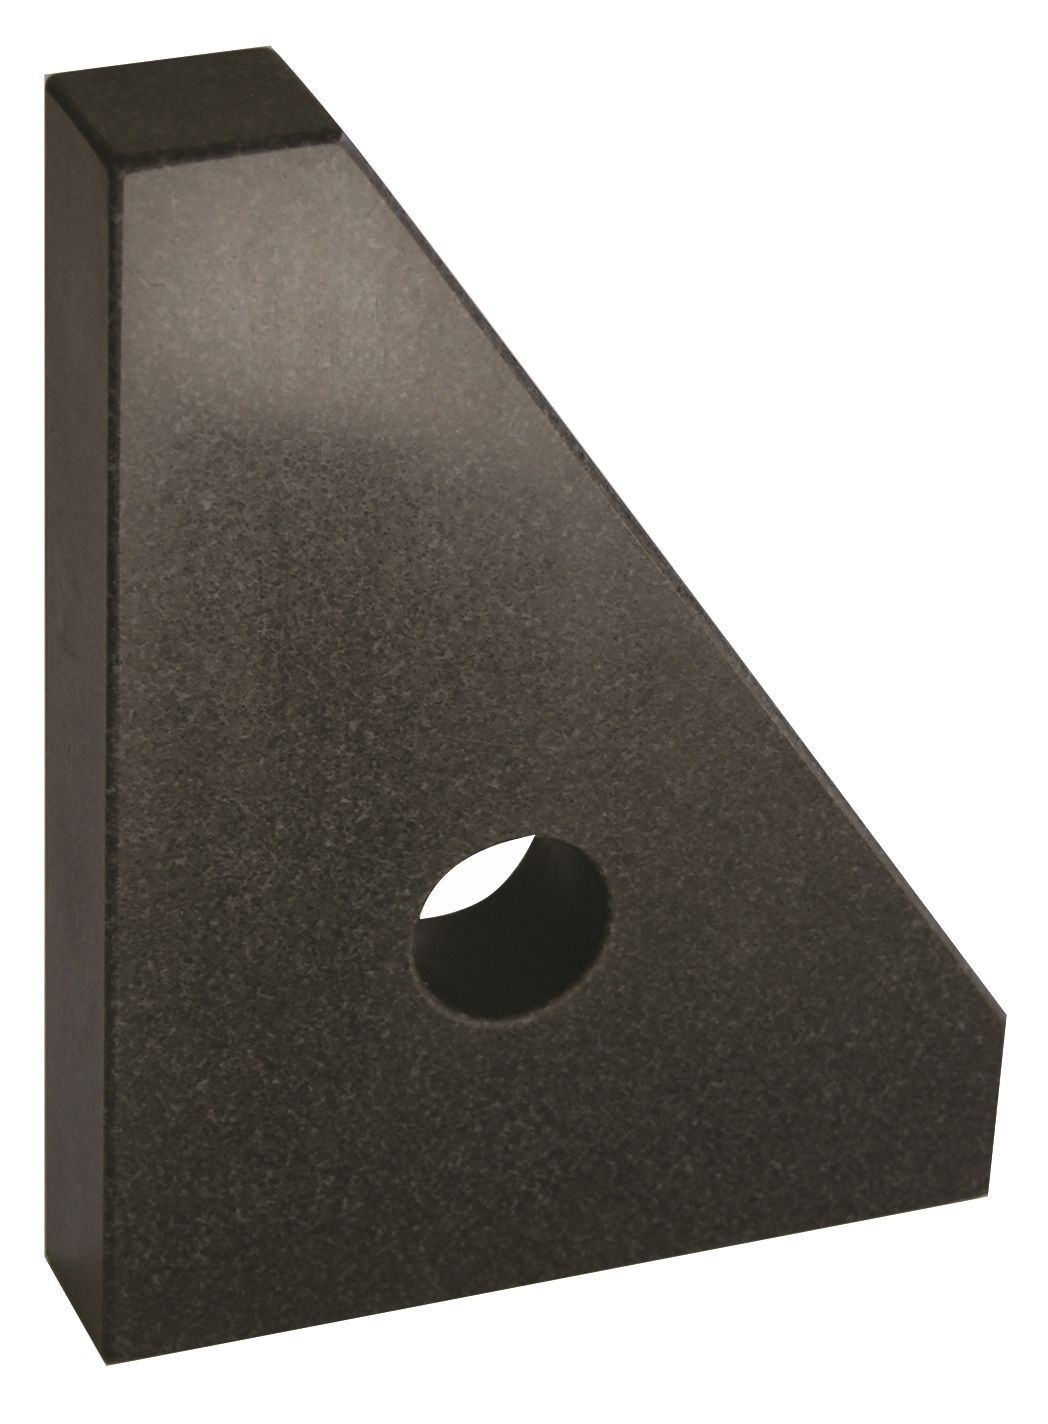 Präzisions-Winkel aus Granit 160 x 100 x 20 mm | DIN 875-0